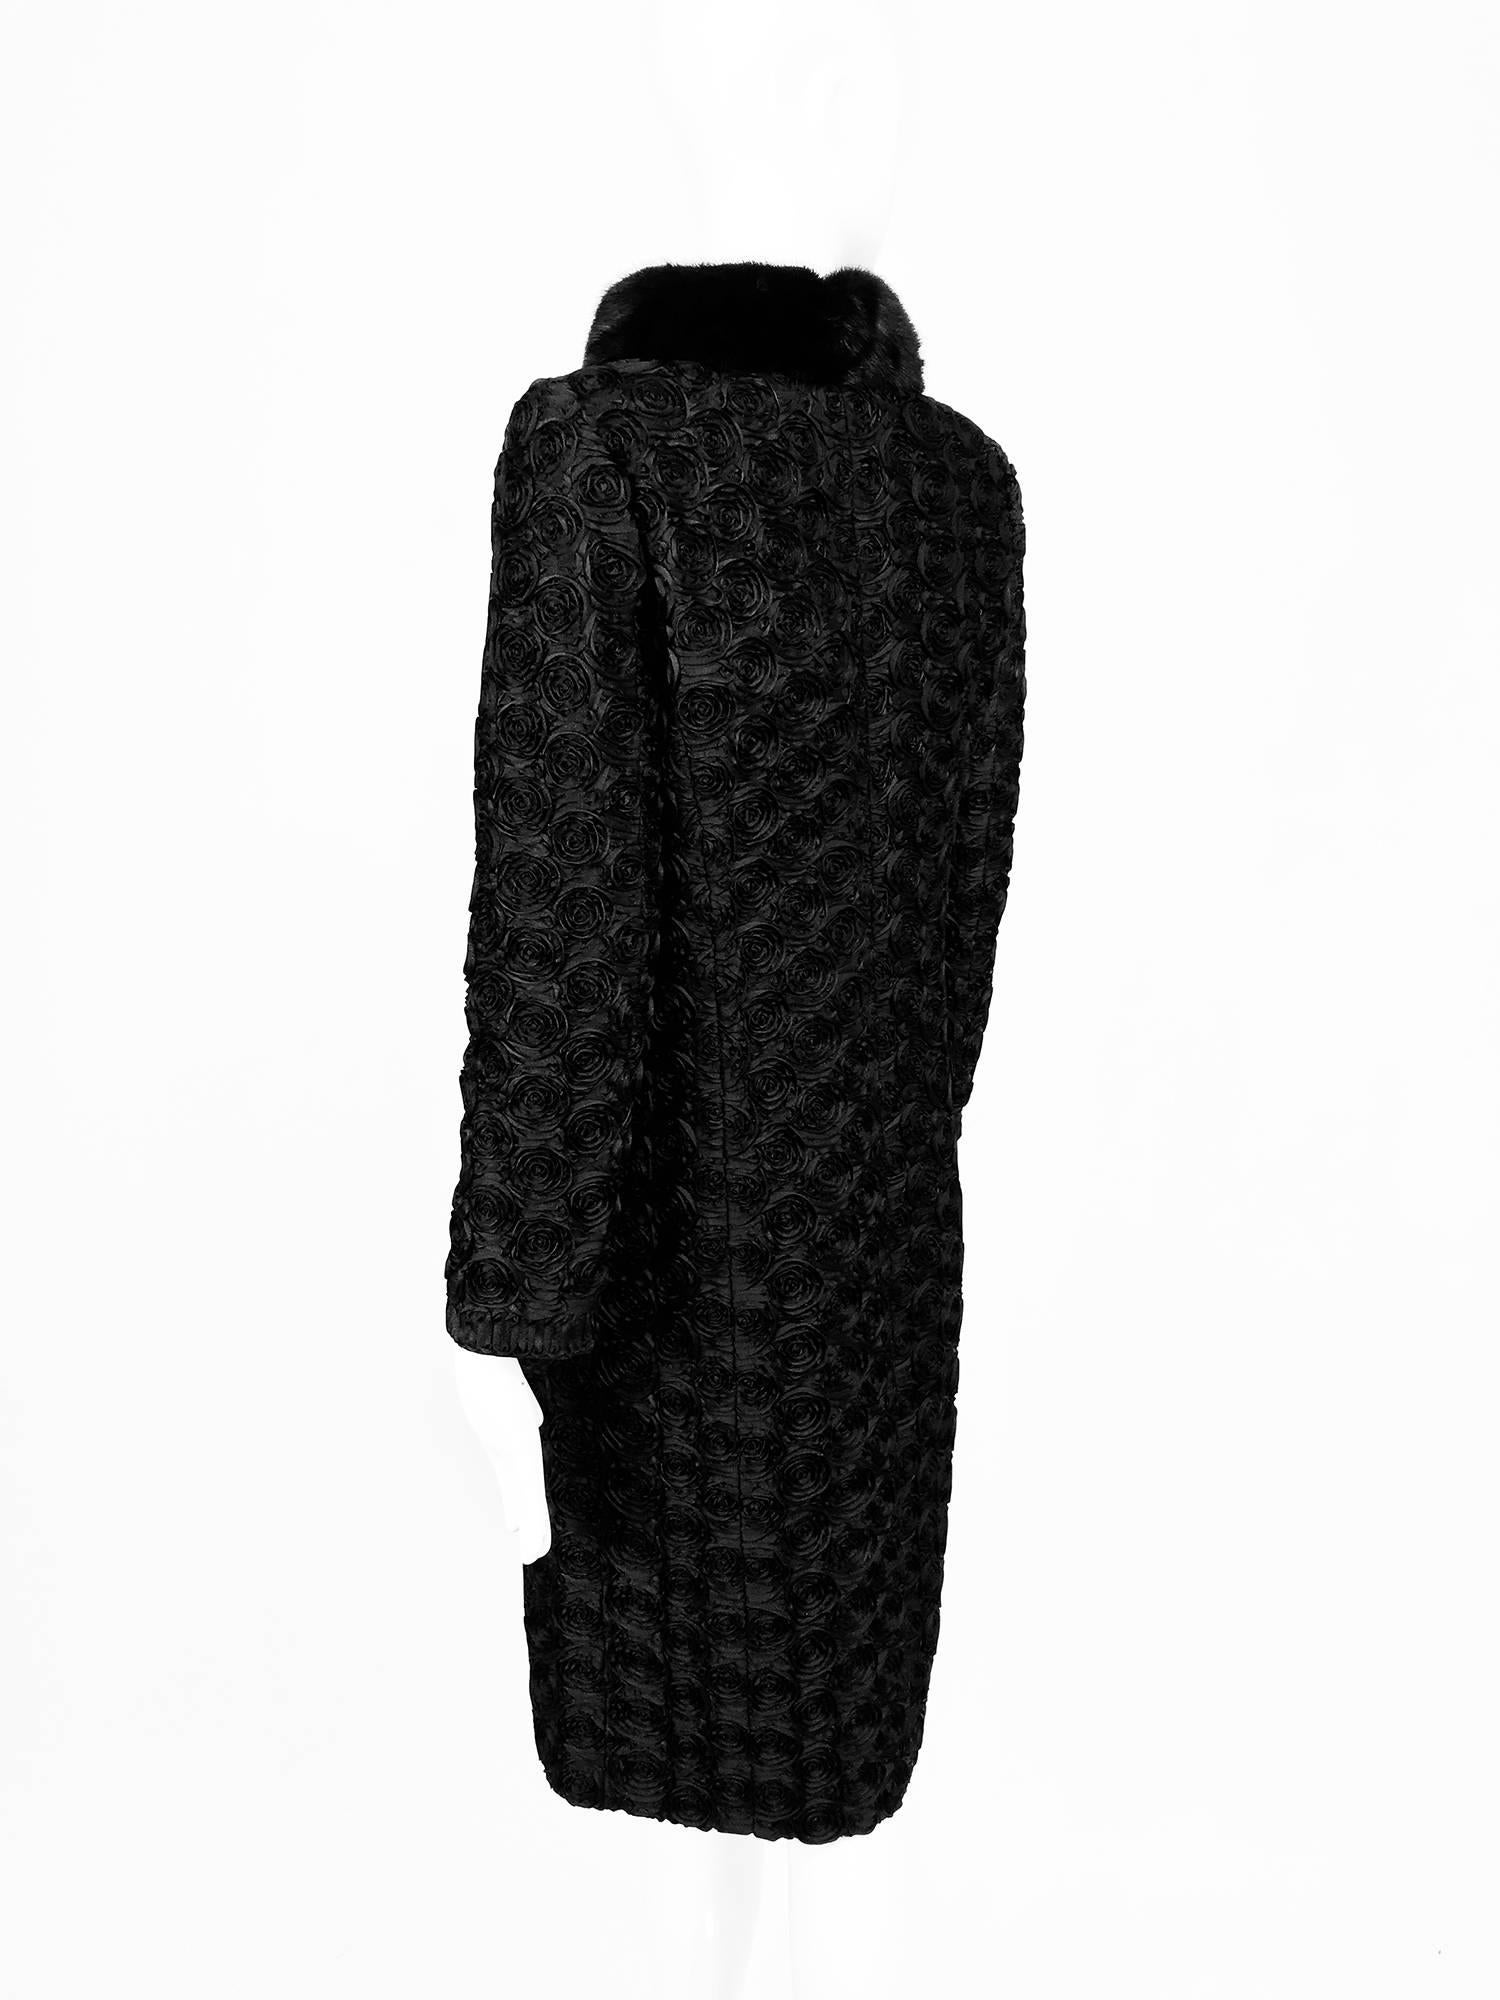 Valentino Black Silk Faille Appliqued Coat Mink Collar  For Sale 5